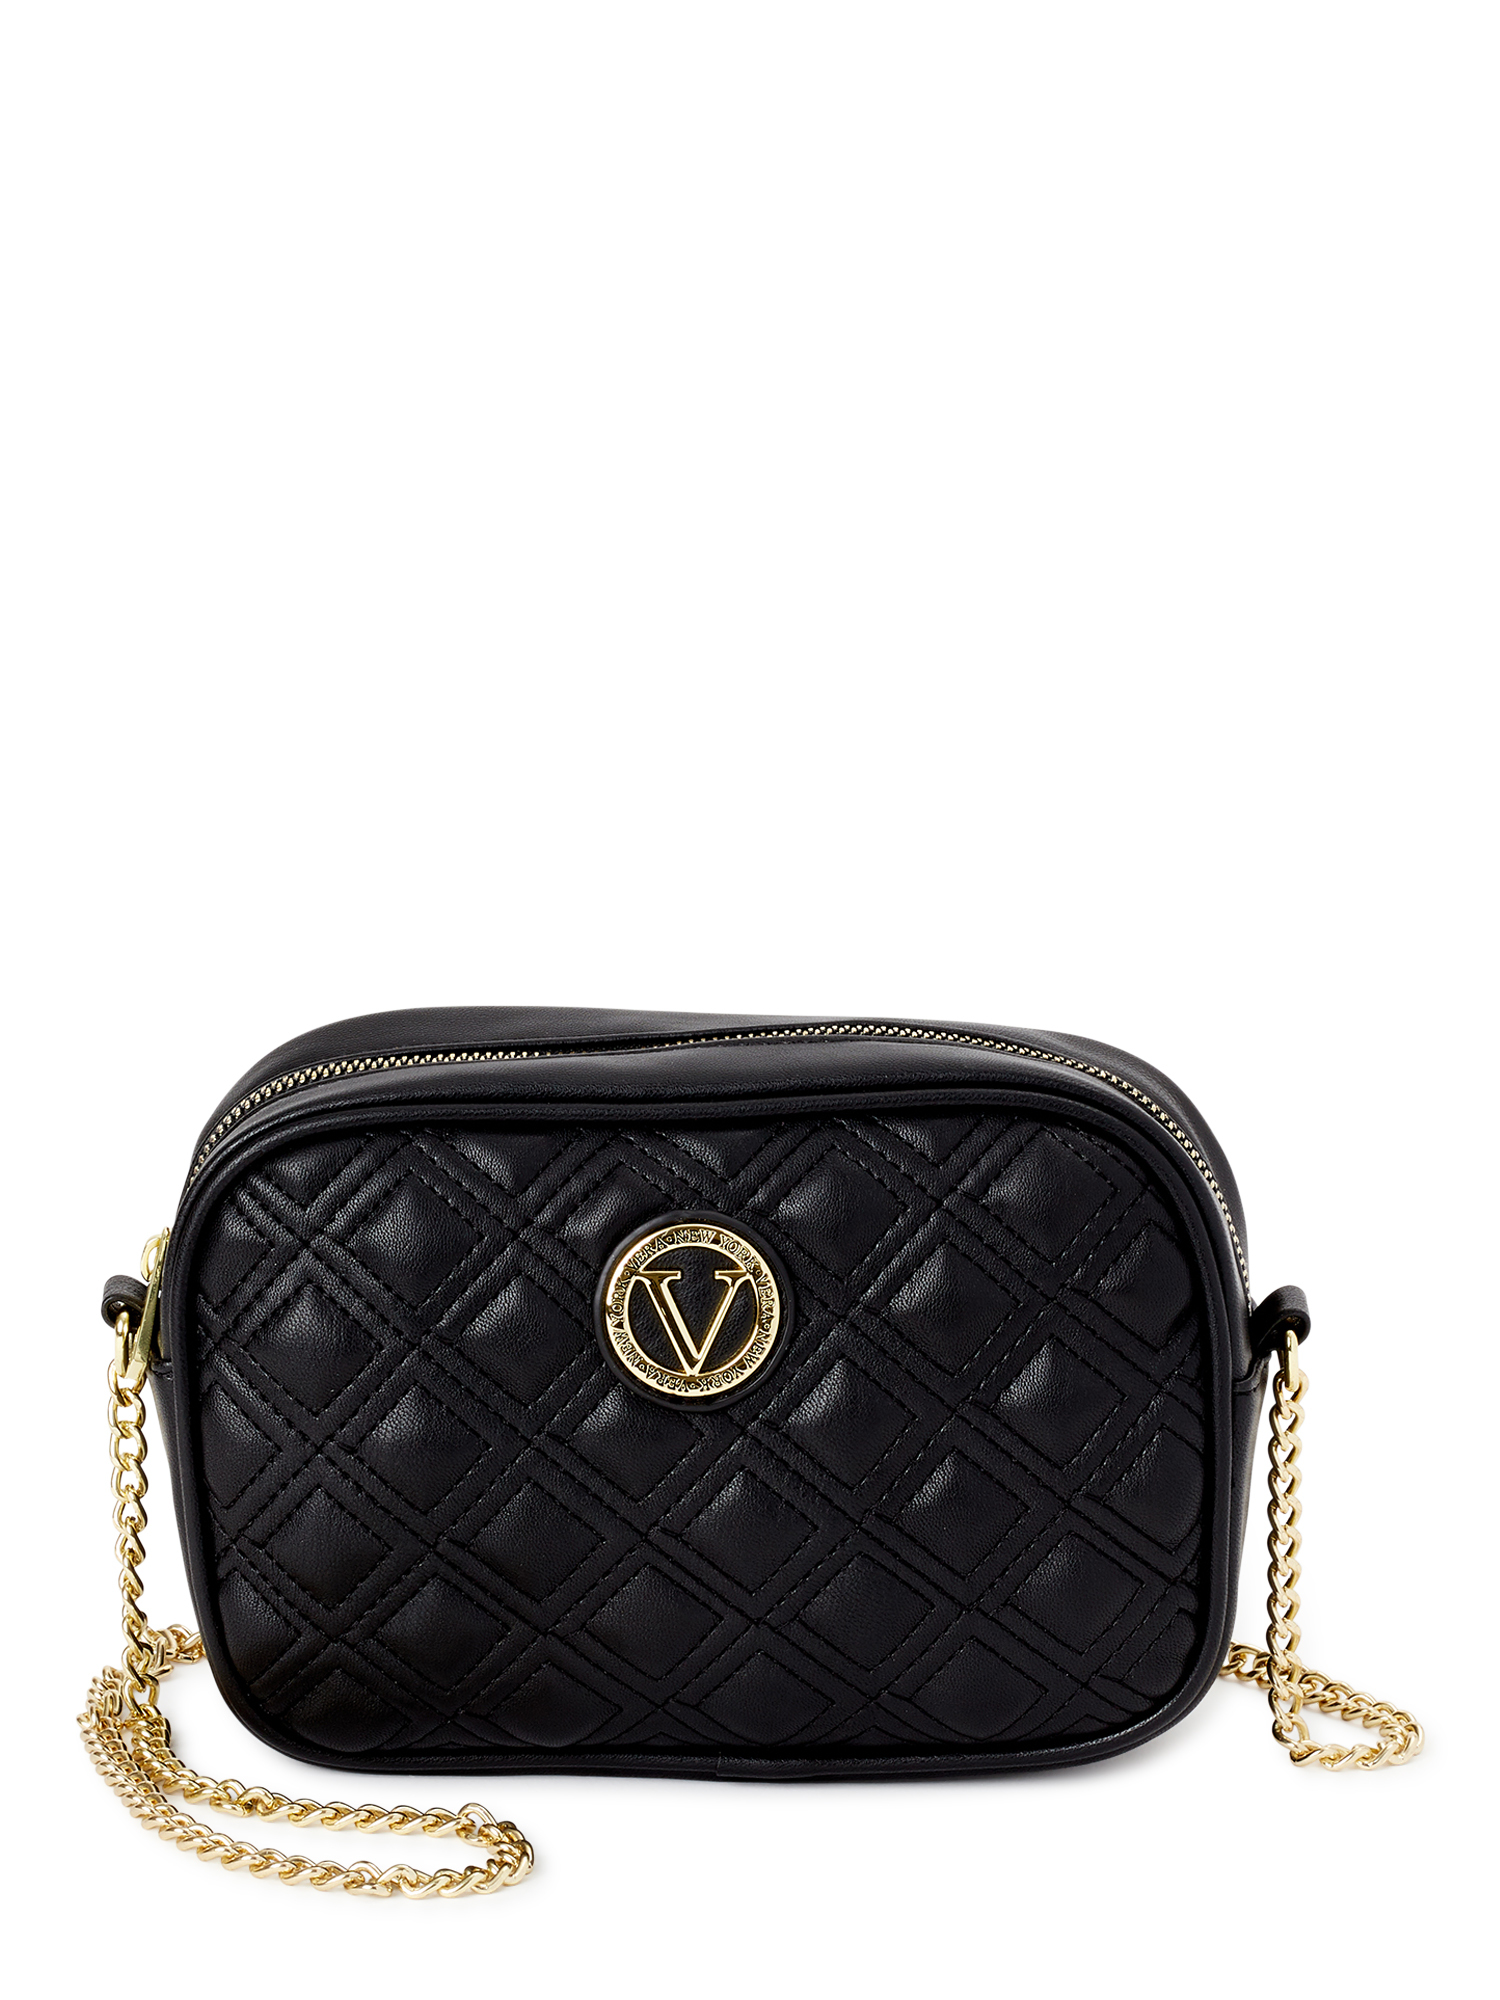 Vera New York Women's Marina Quilted Crossbody Handbag with Chain Straps Black - image 1 of 5